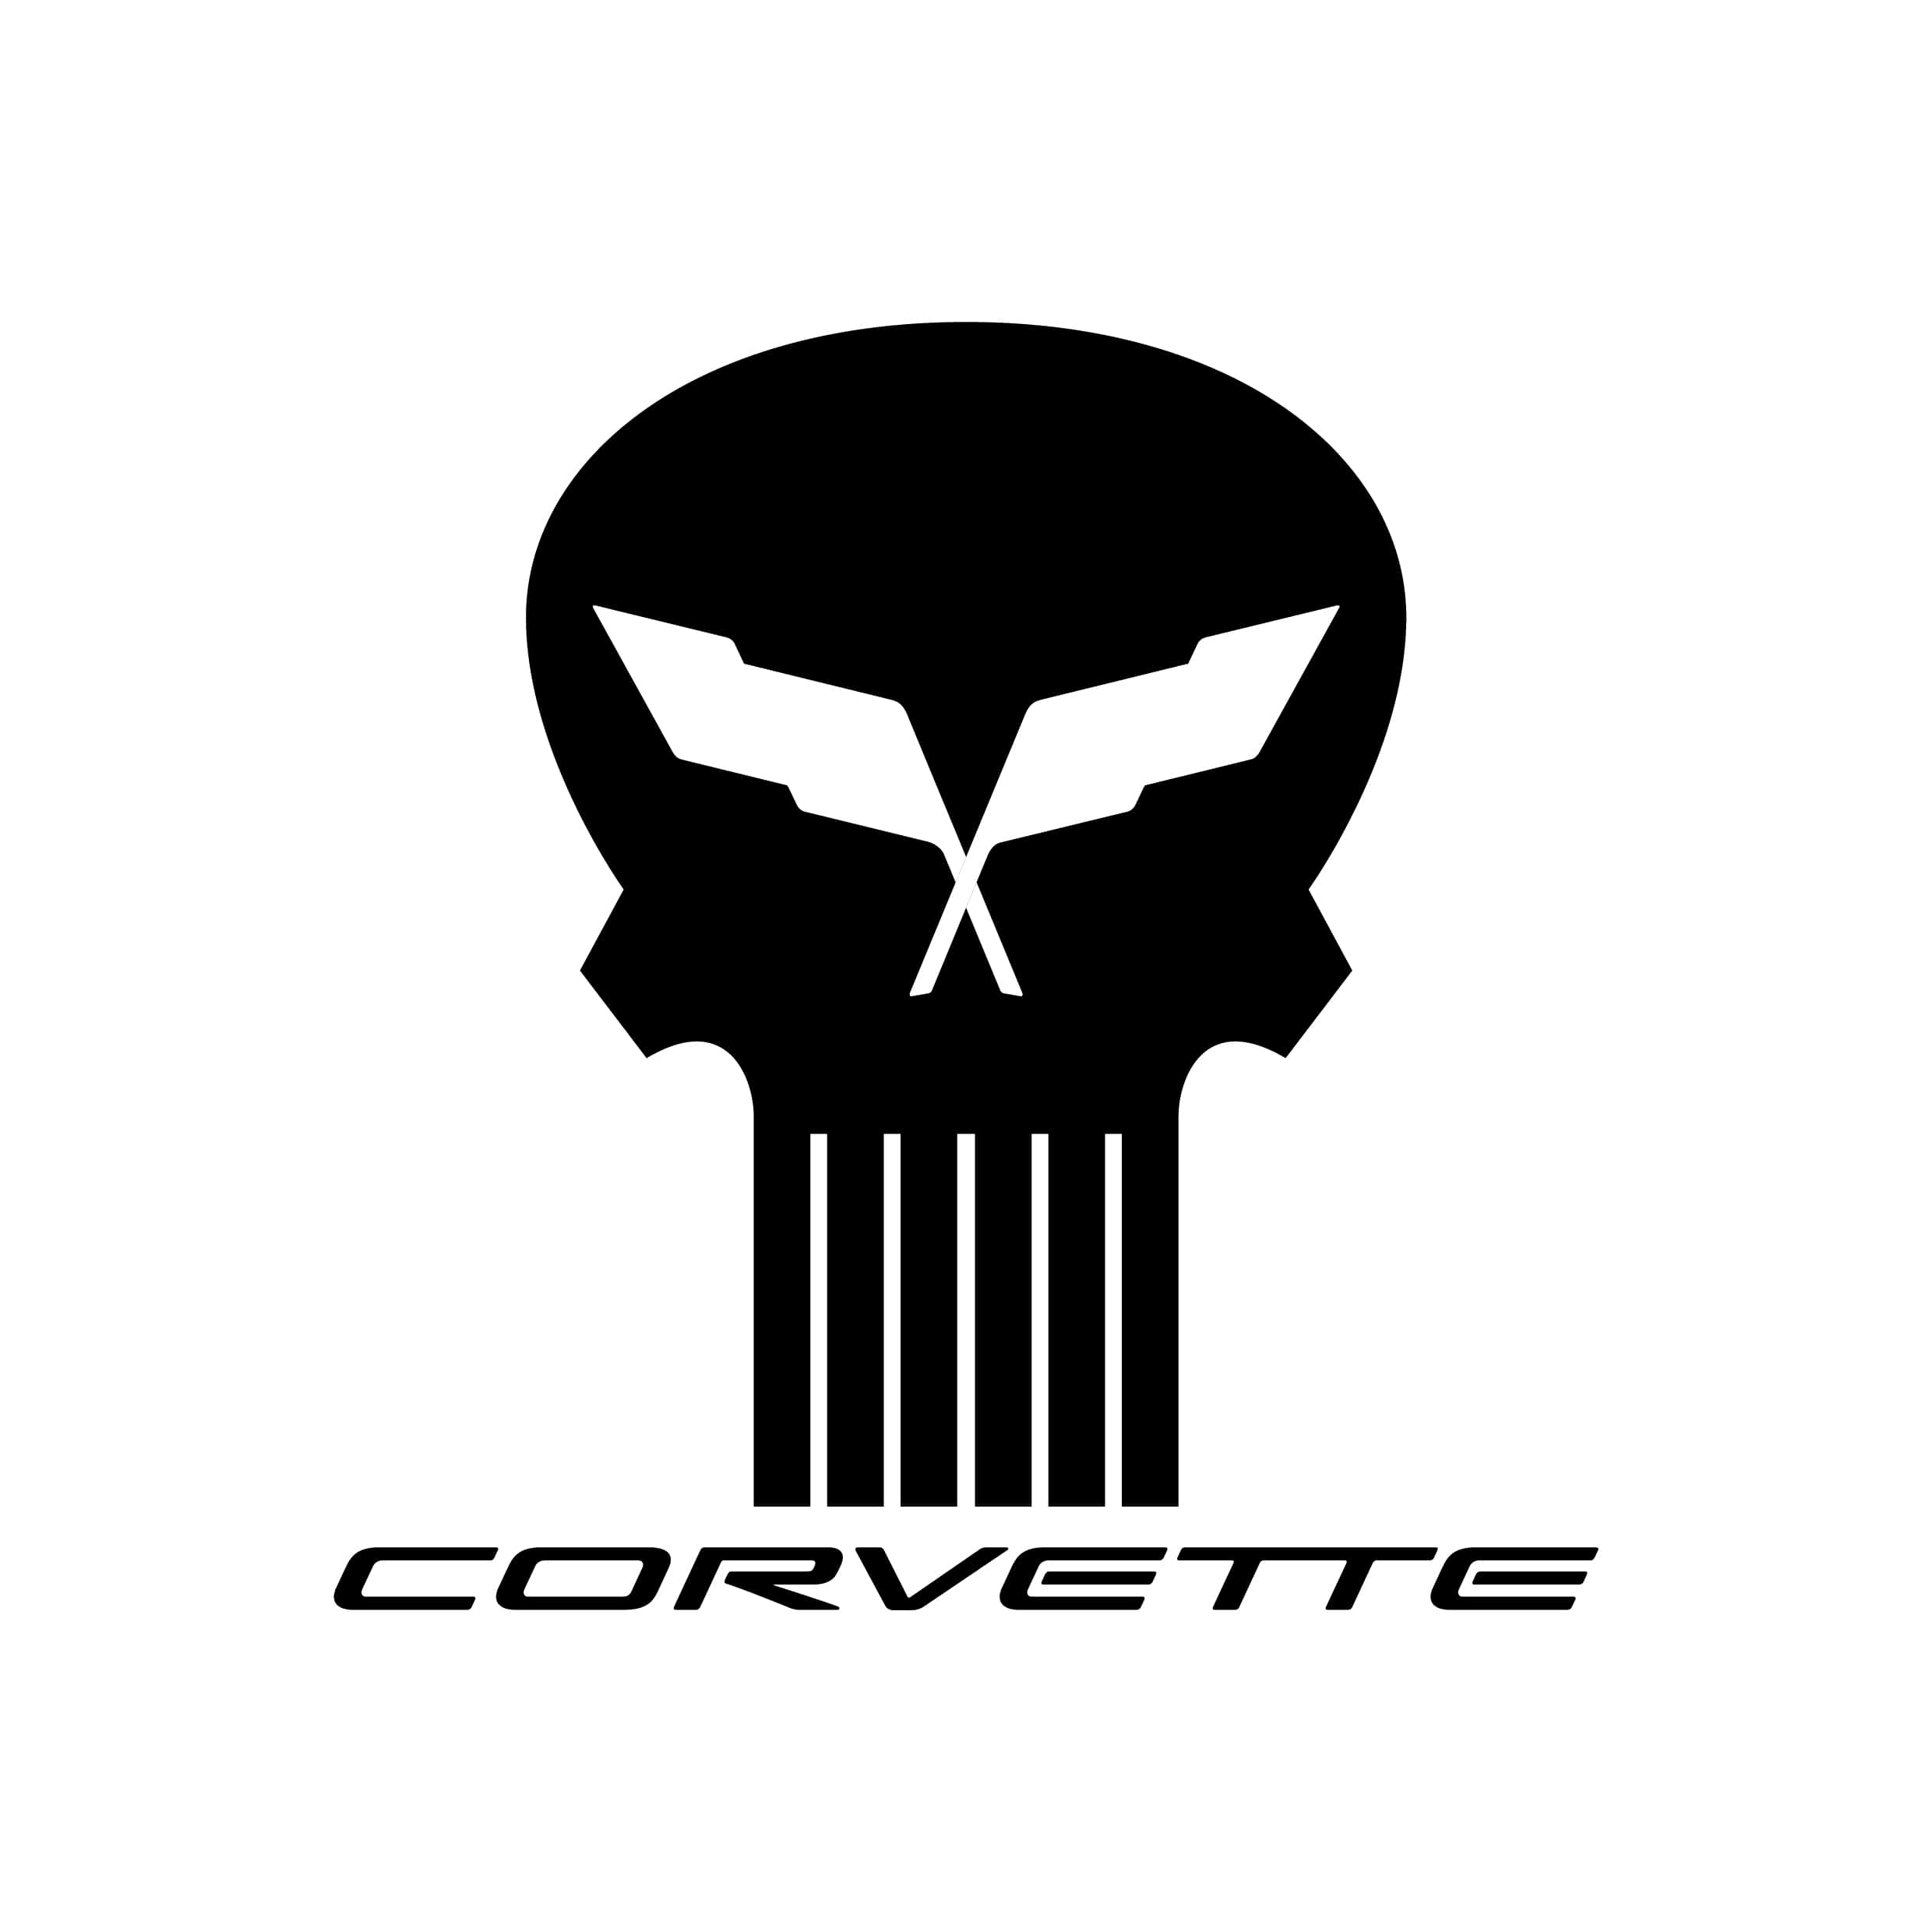 stickers-corvette-chevrolet-ref43-autocollant-voiture-sticker-auto-autocollants-decals-sponsors-racing-tuning